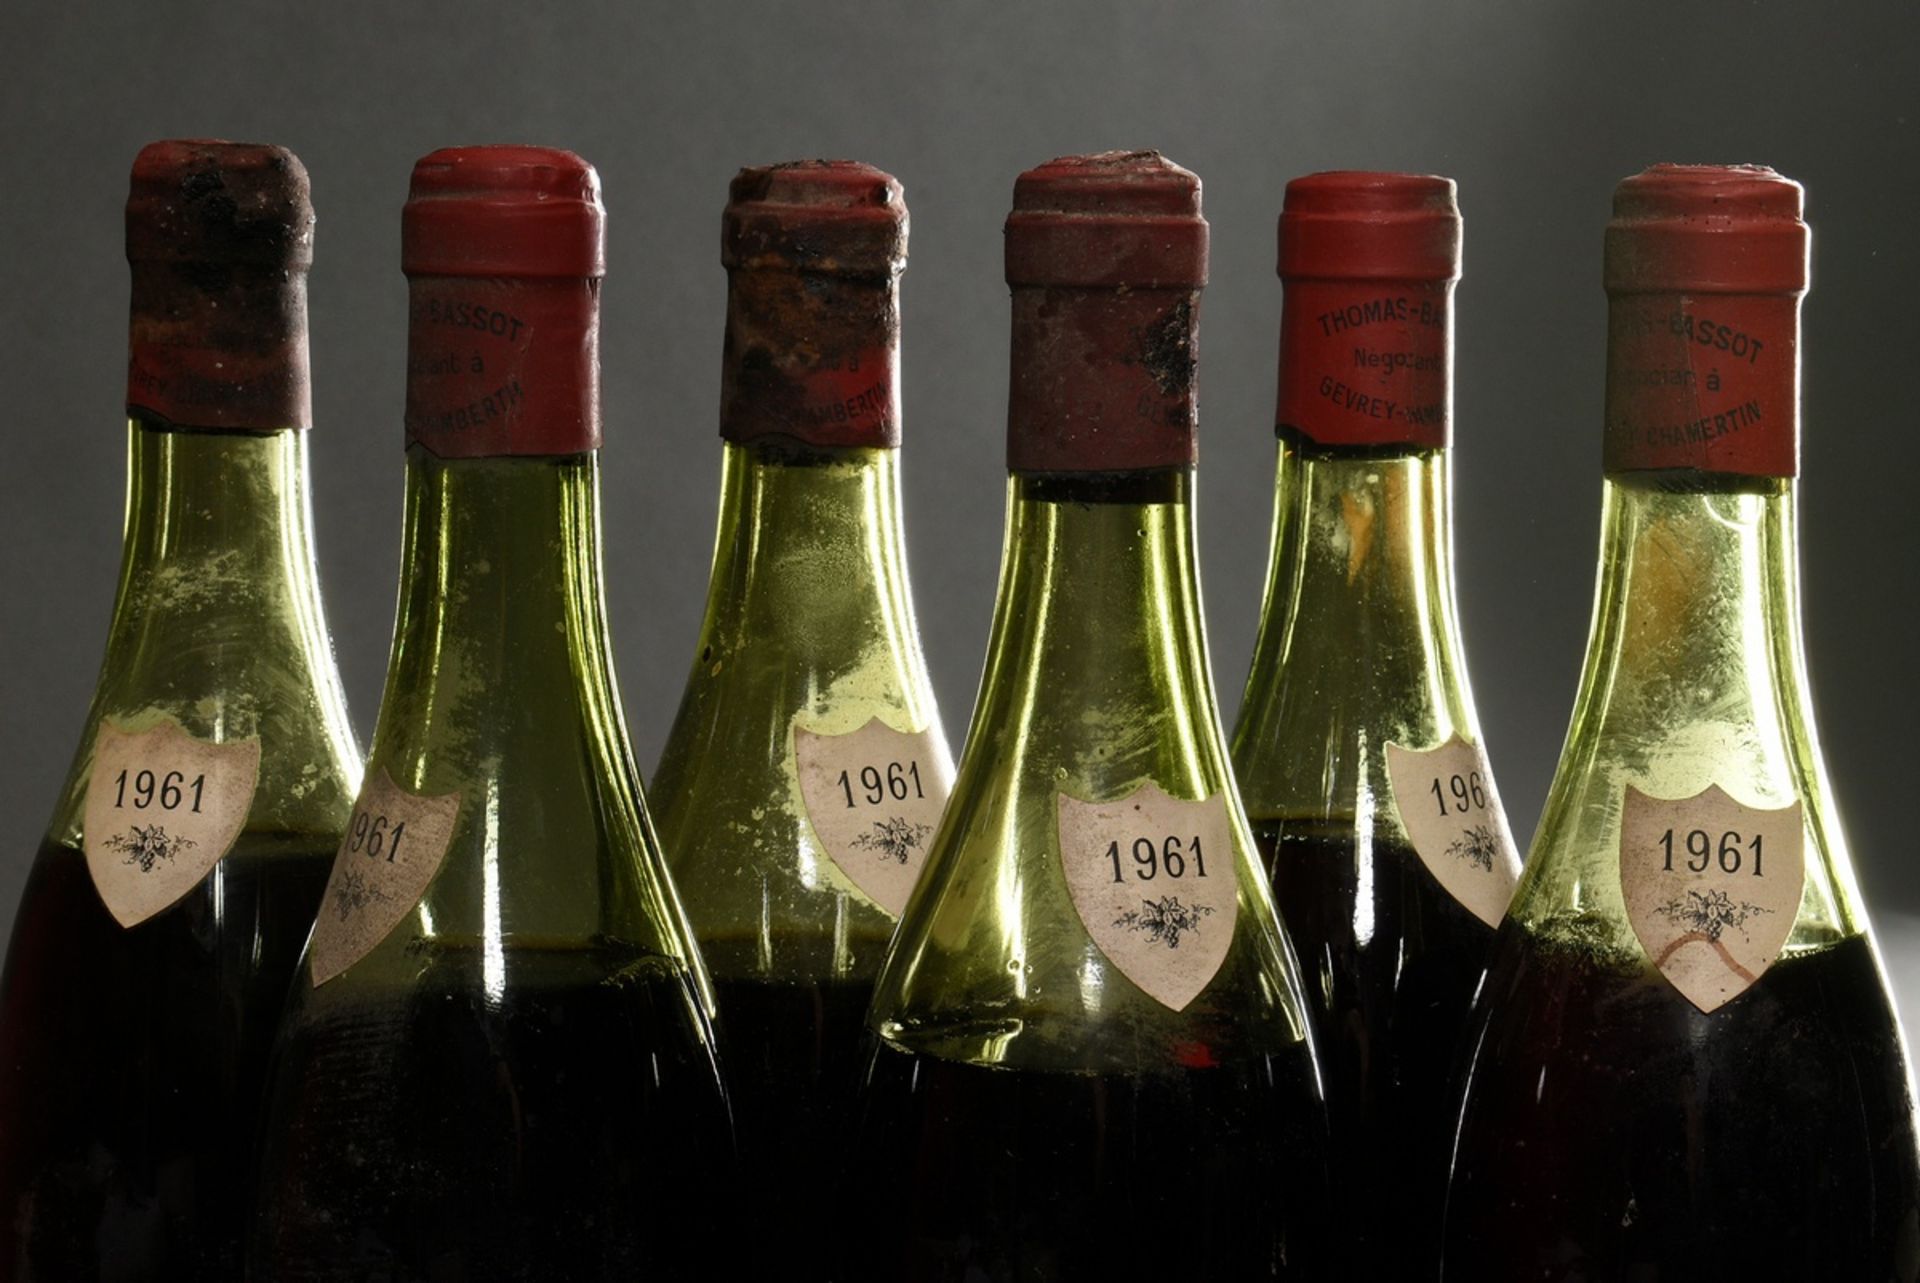 6 Flaschen 1961 Vins fins de la Cote de Nuits, Maison Thomas Bassot, Gevrey-Chambertin, Rotwein, Bu - Bild 4 aus 5